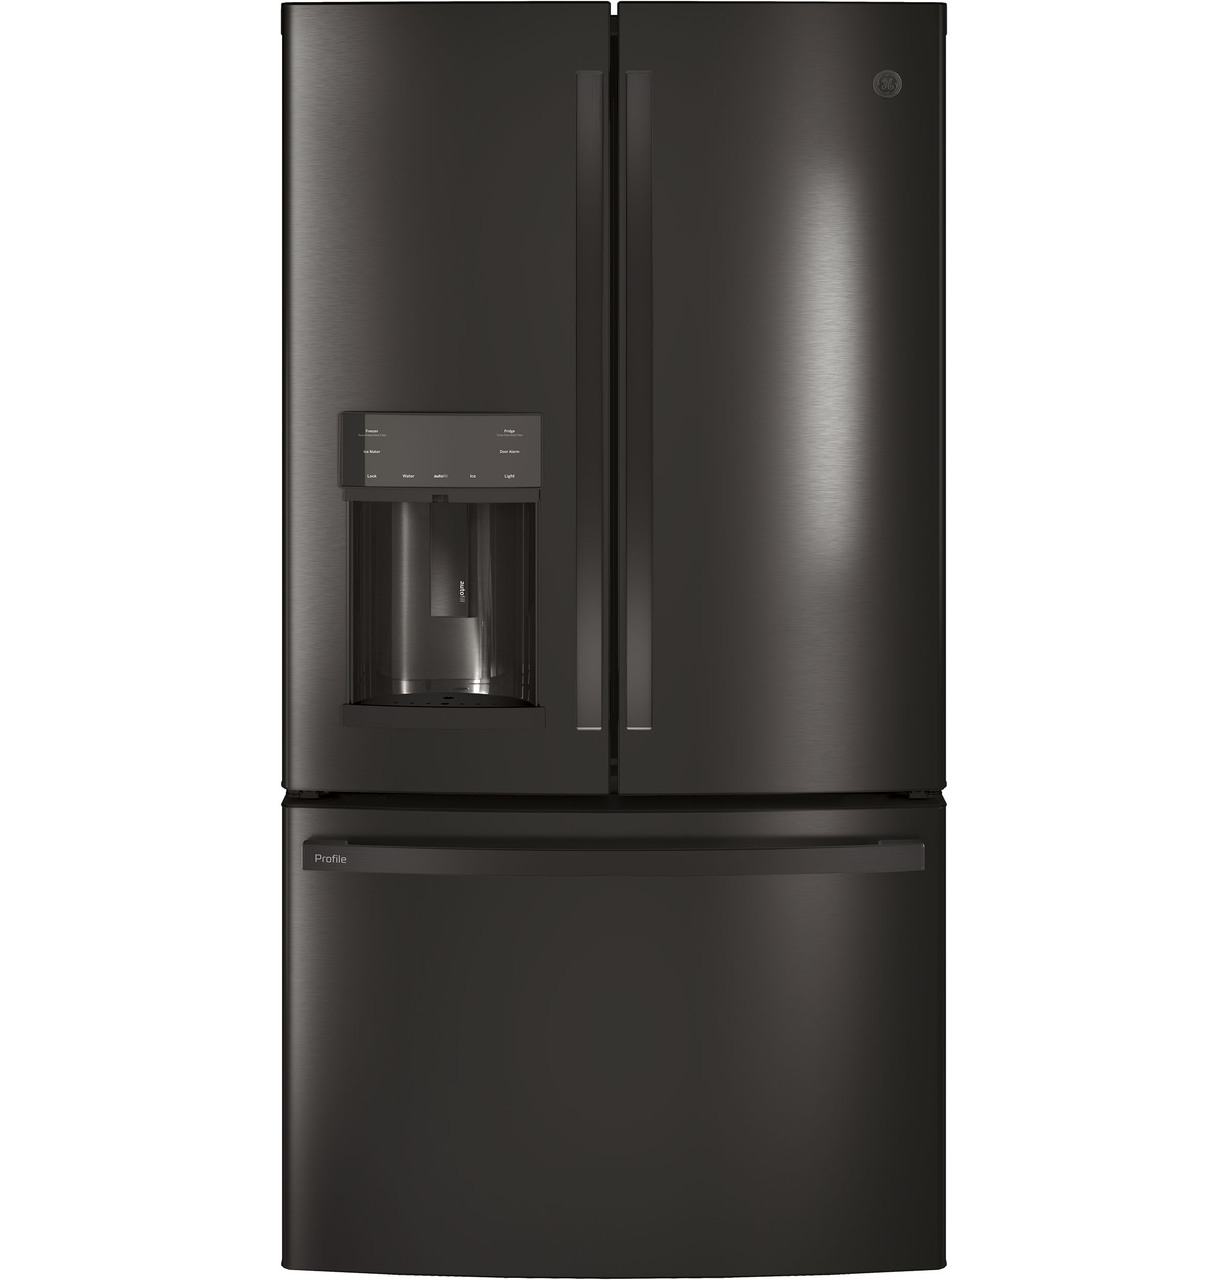 GE black profile energy star 22.1 french door refrigerator